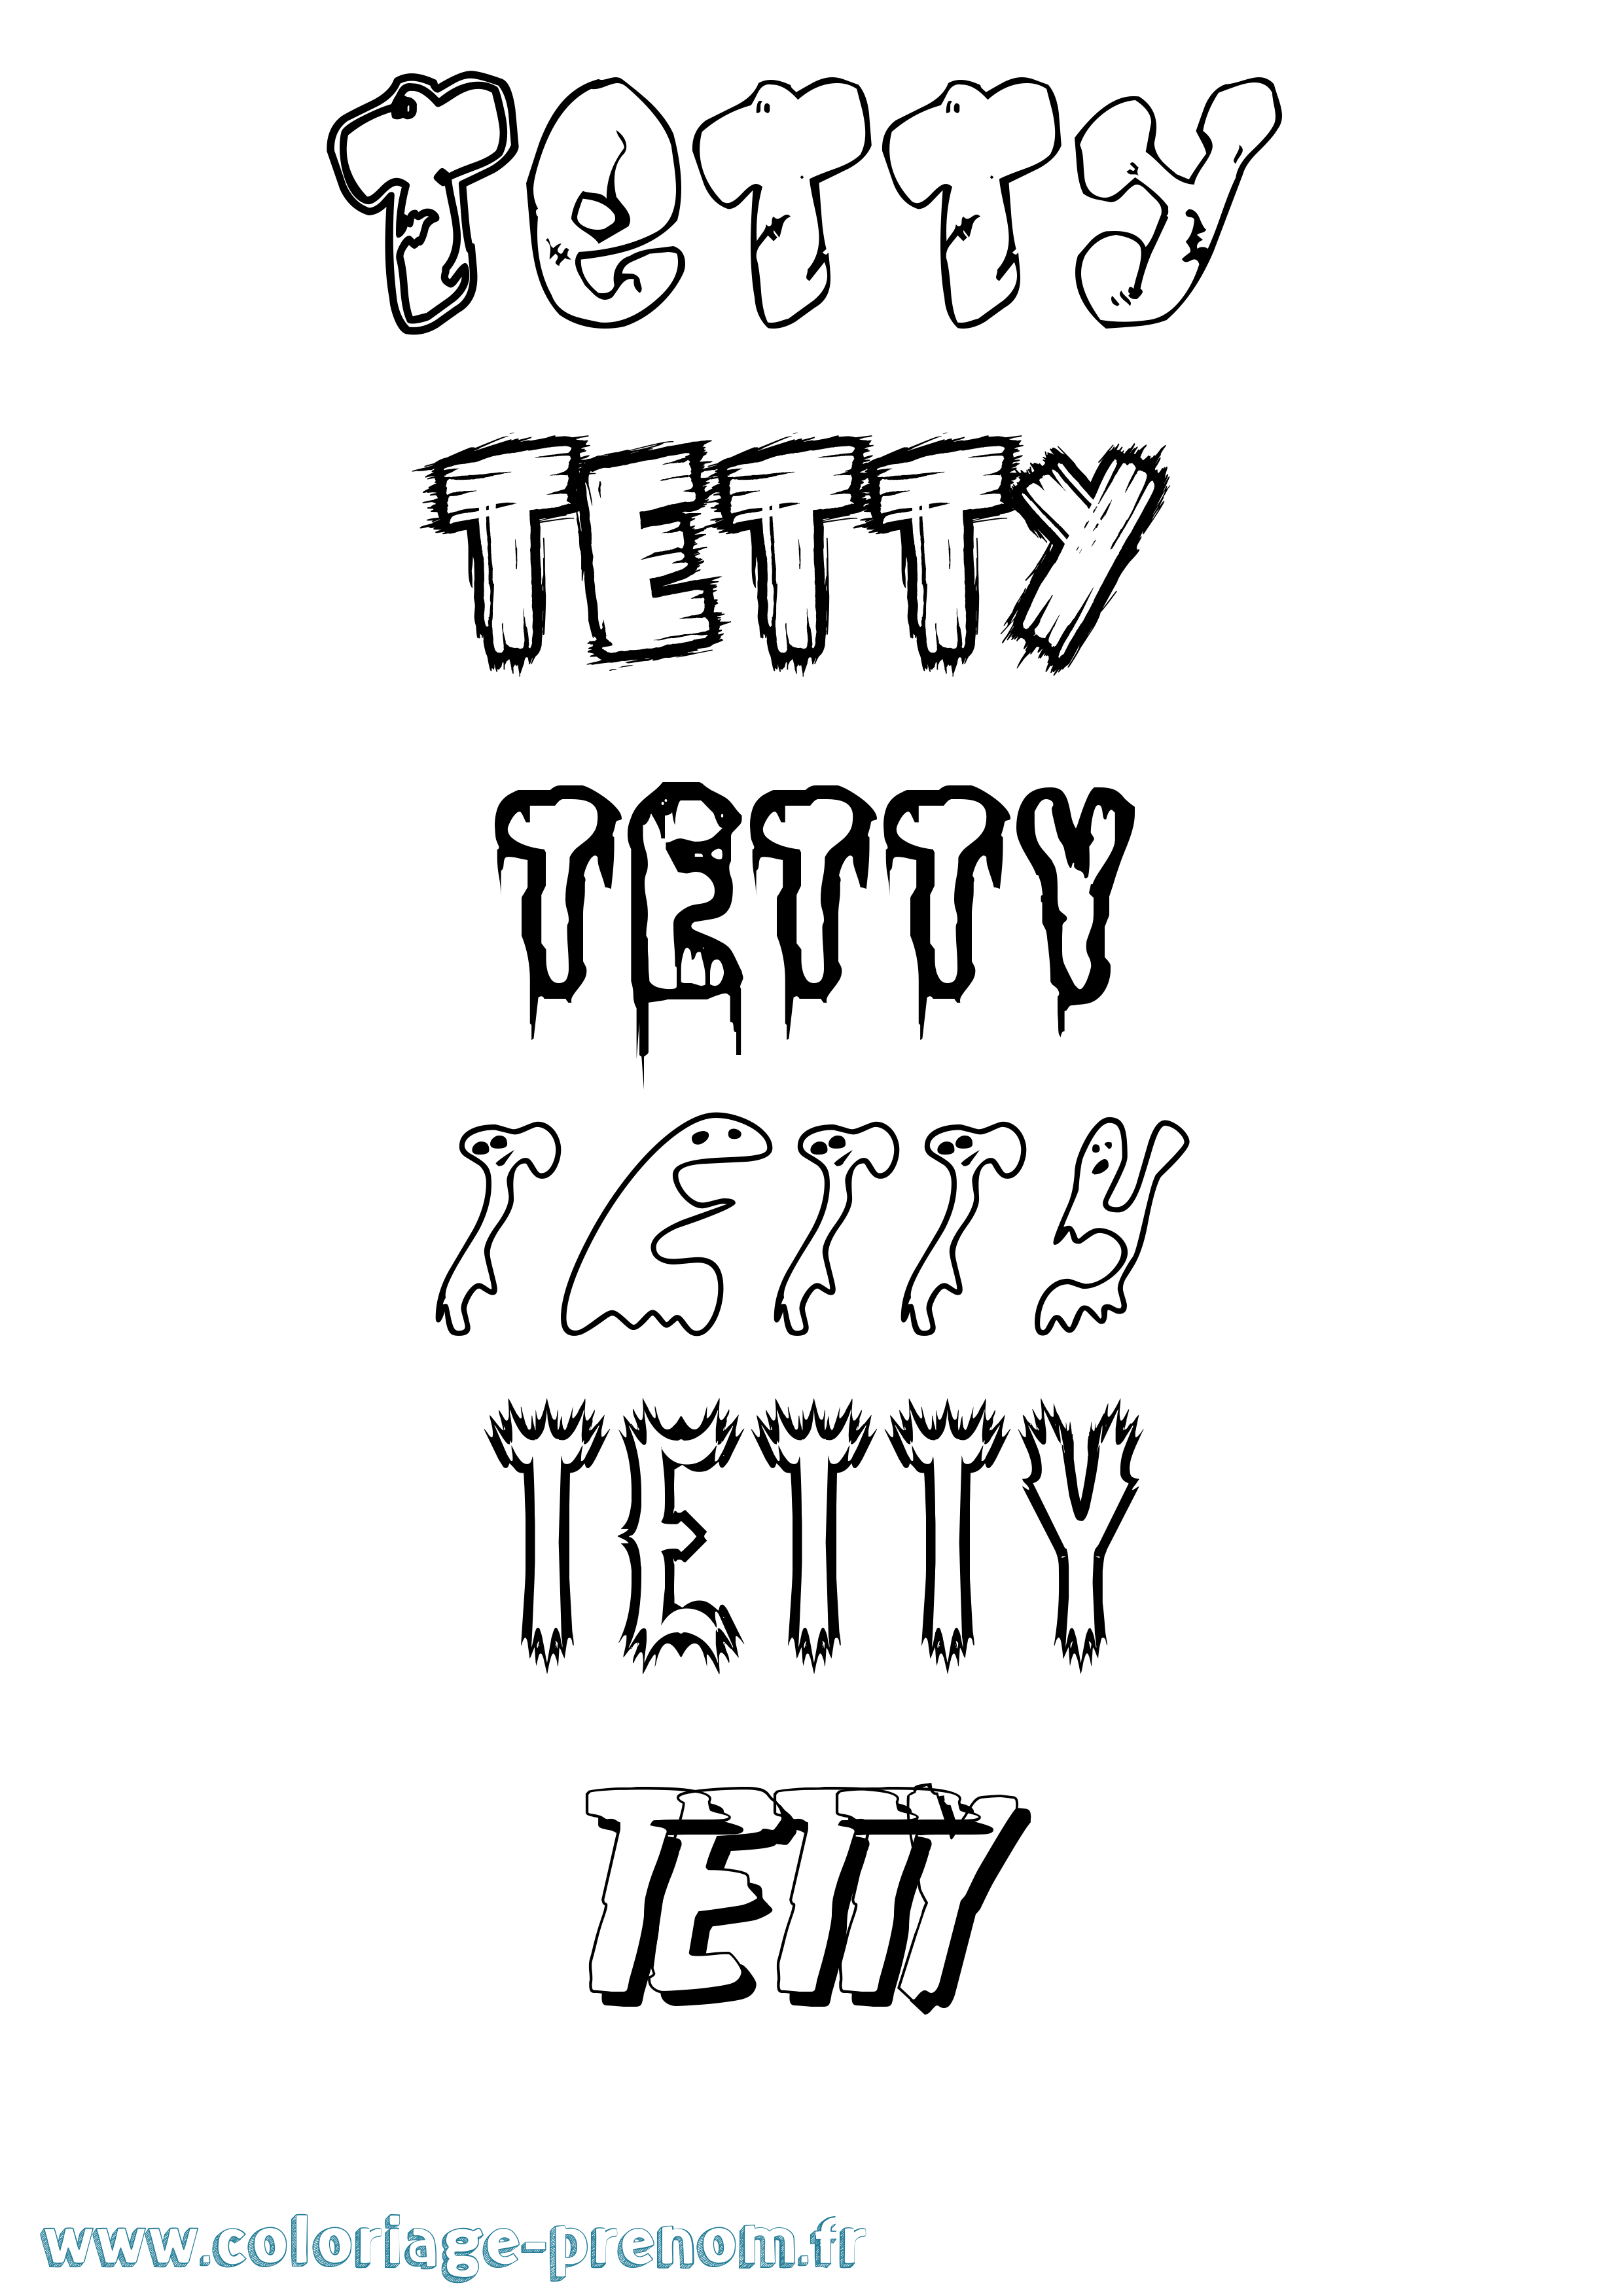 Coloriage prénom Tetty Frisson